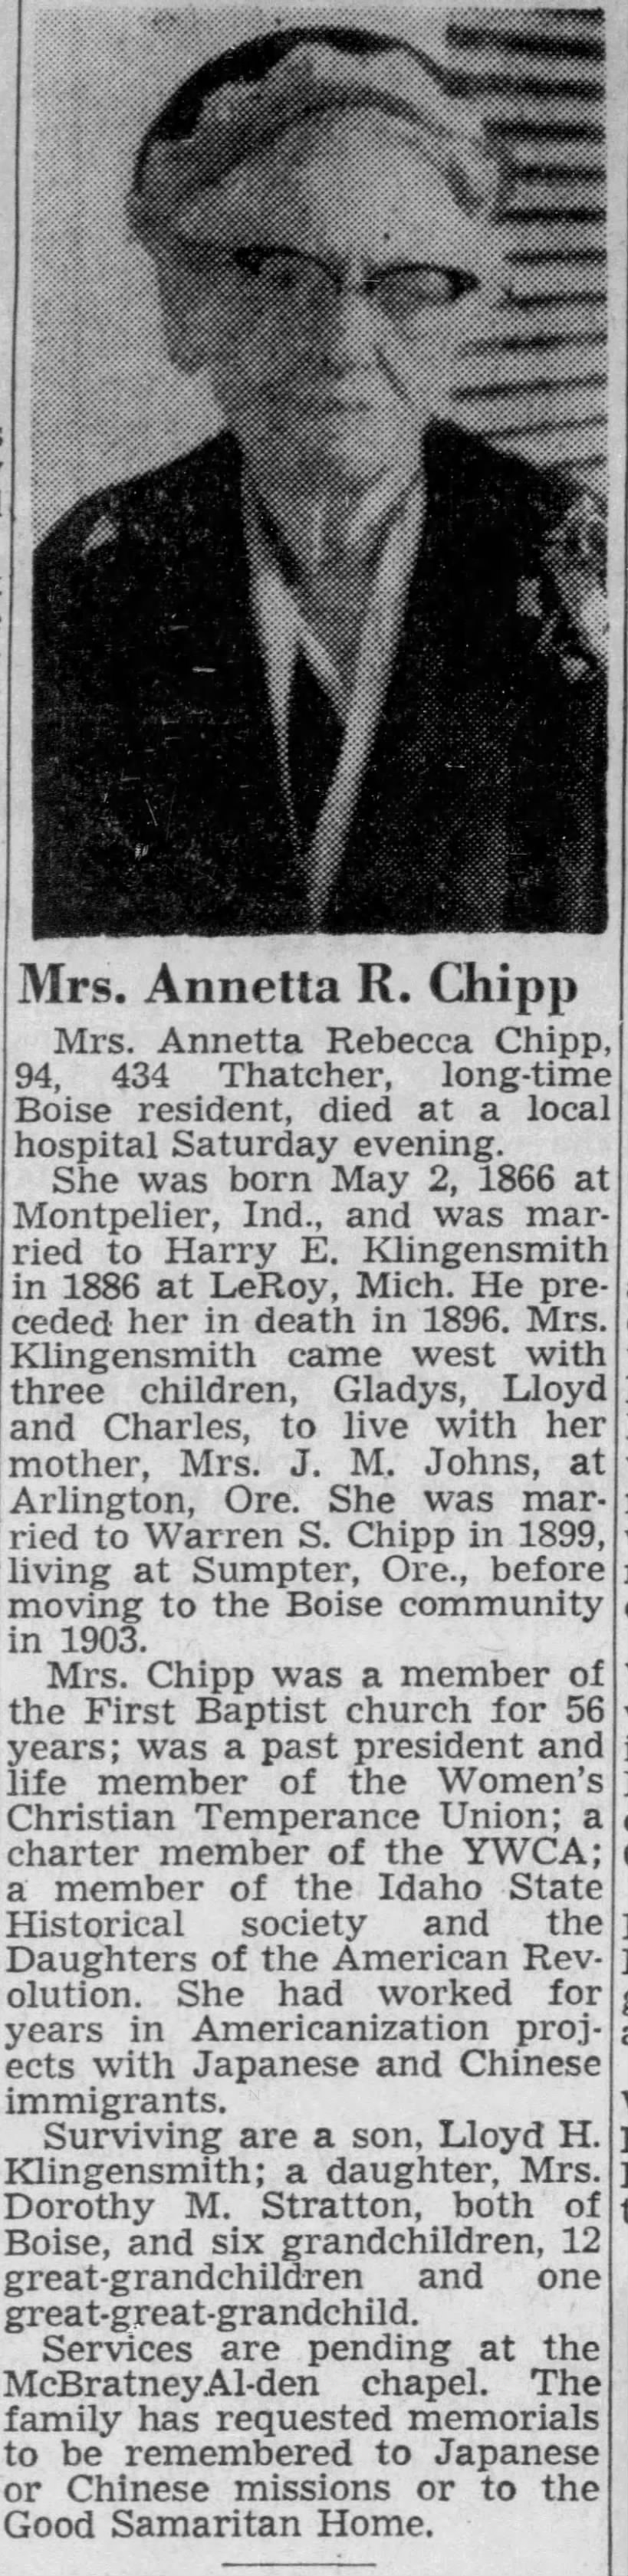 Obituary, Annetta Rebecca Chipp. Died in Boise, Idaho, March 25, 1961.